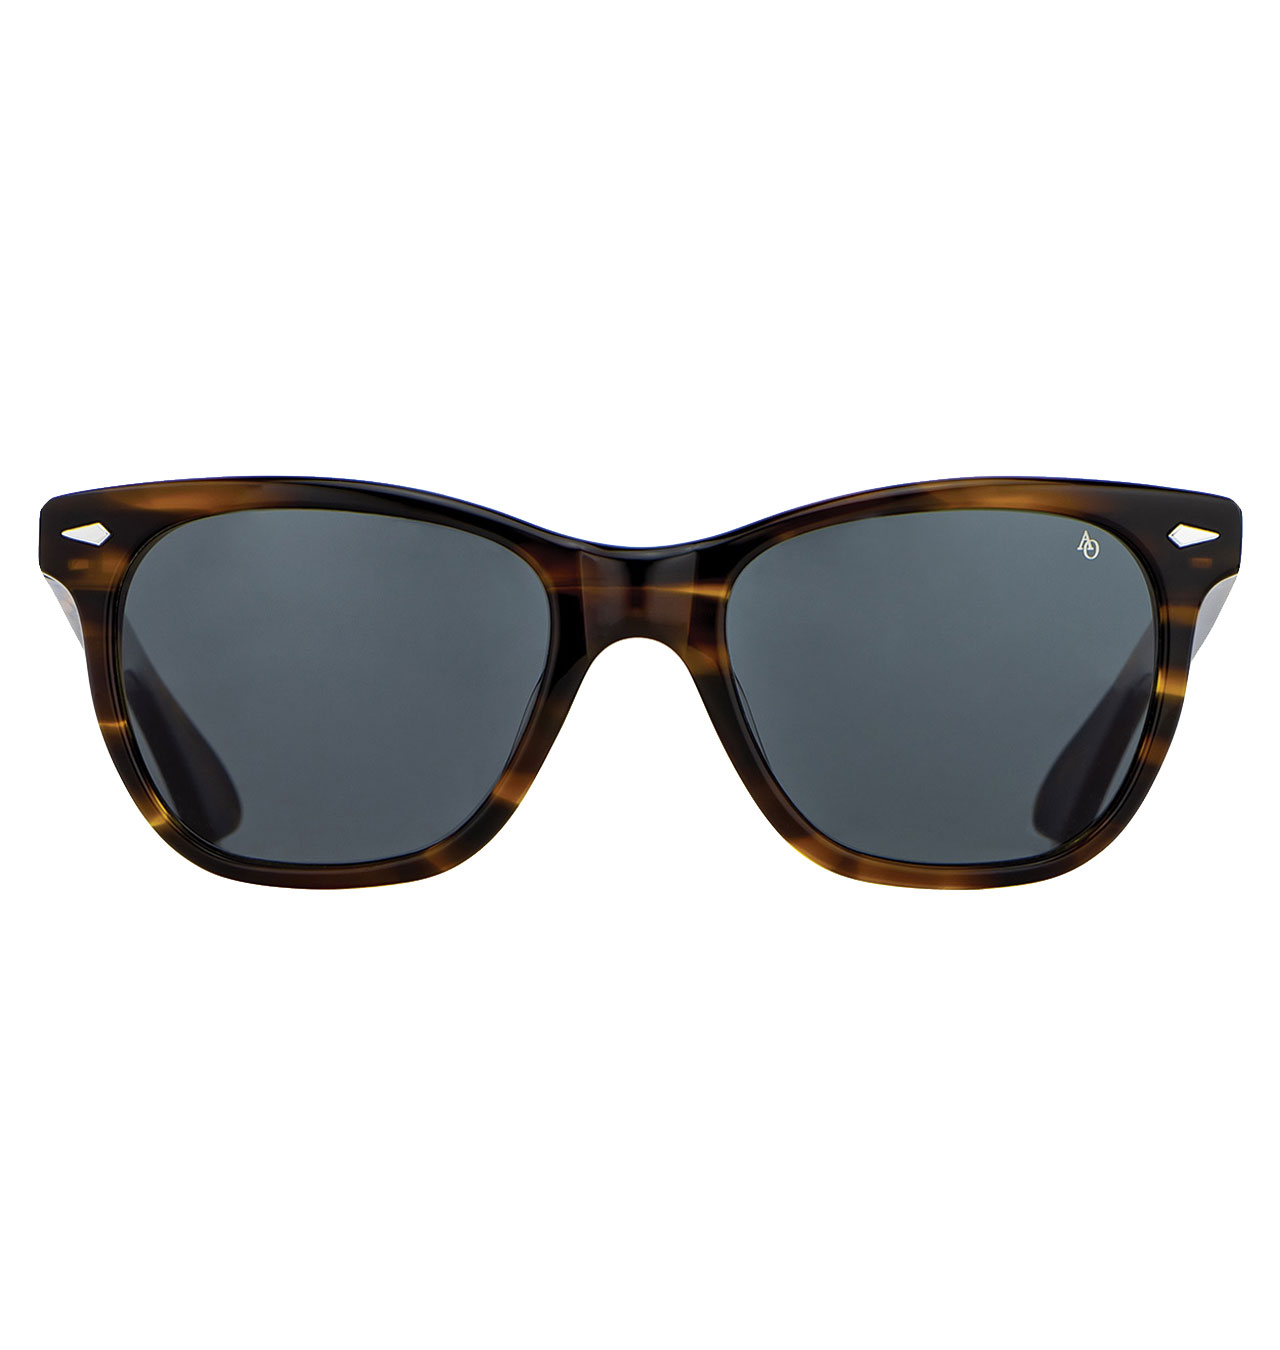 American Optical - Saratoga Sunglasses - Brown Demi